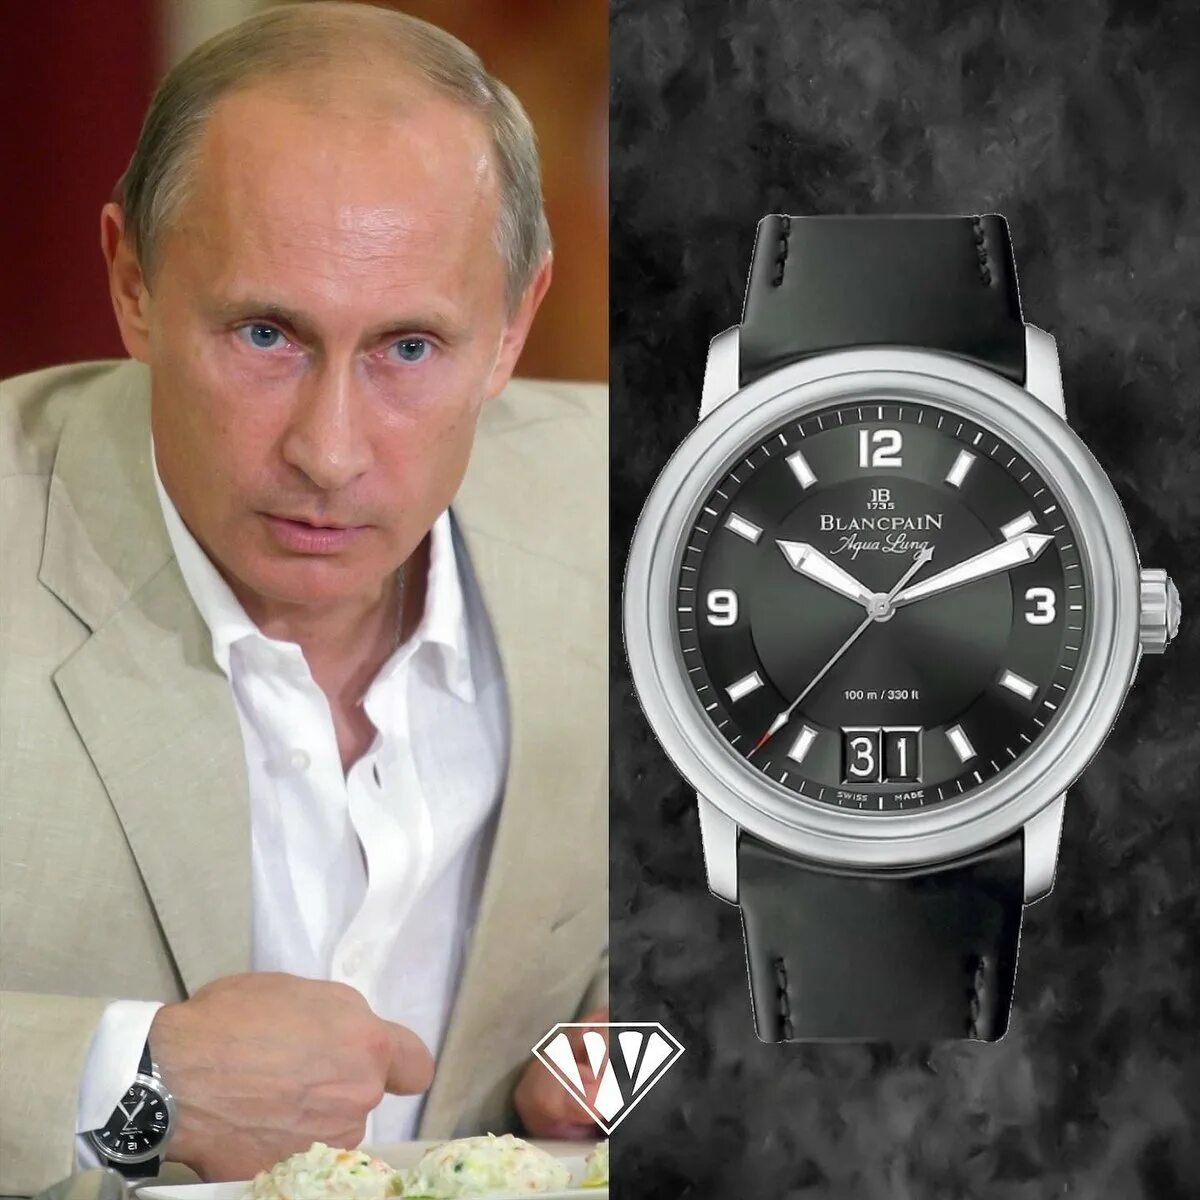 Часы Путина Blancpain Aqualung. Часы Путина Blancpain Leman. Blancpain Aqualung grande Date часы Путина.